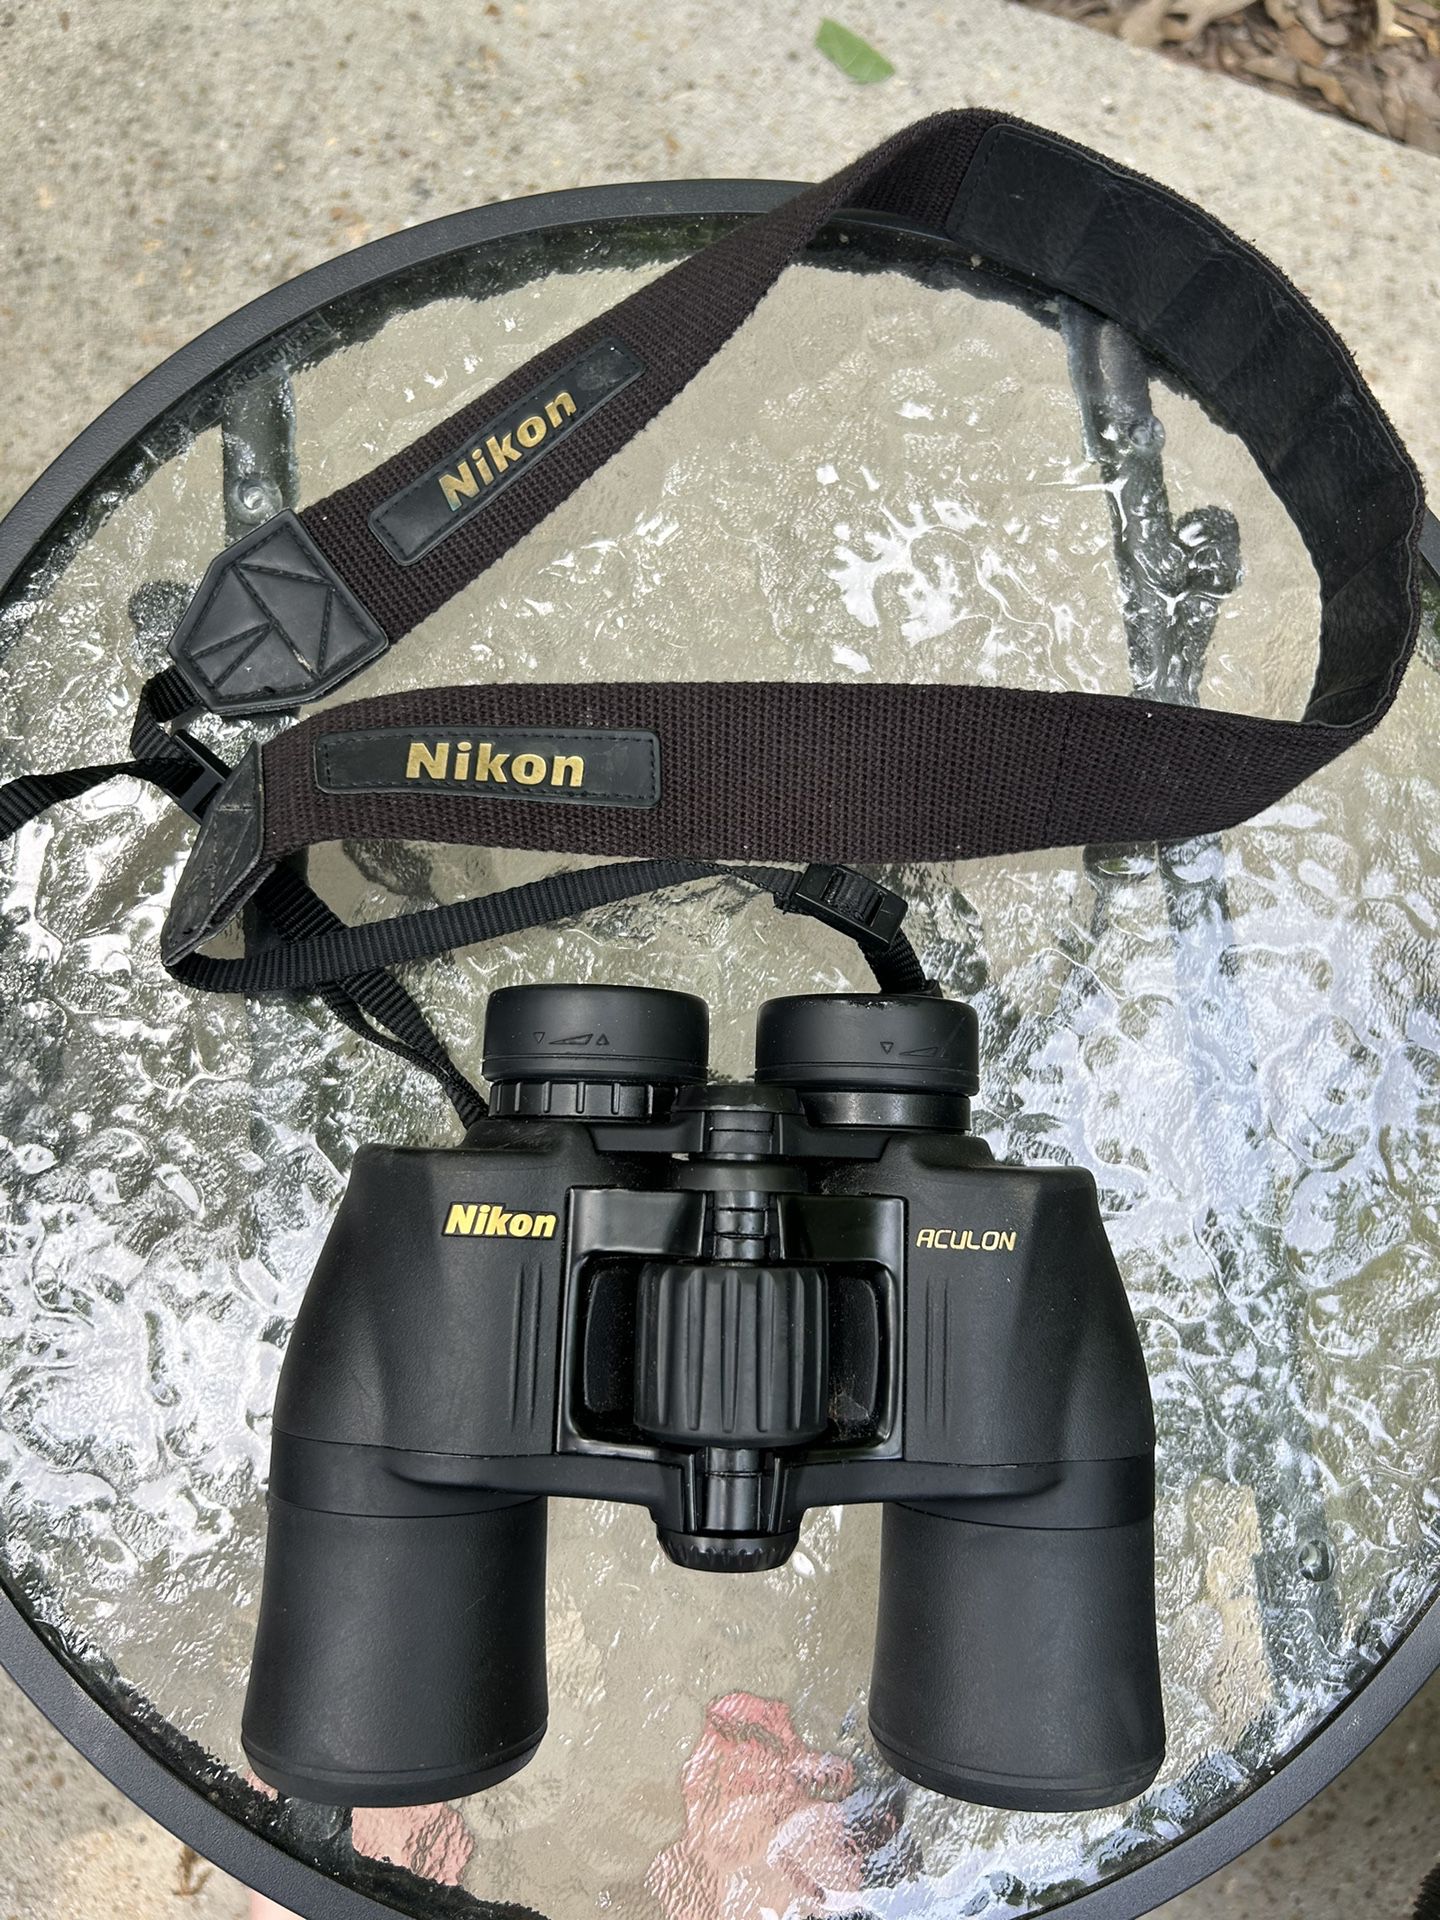 Nikon Aculon Hunting Binoculars Model A211